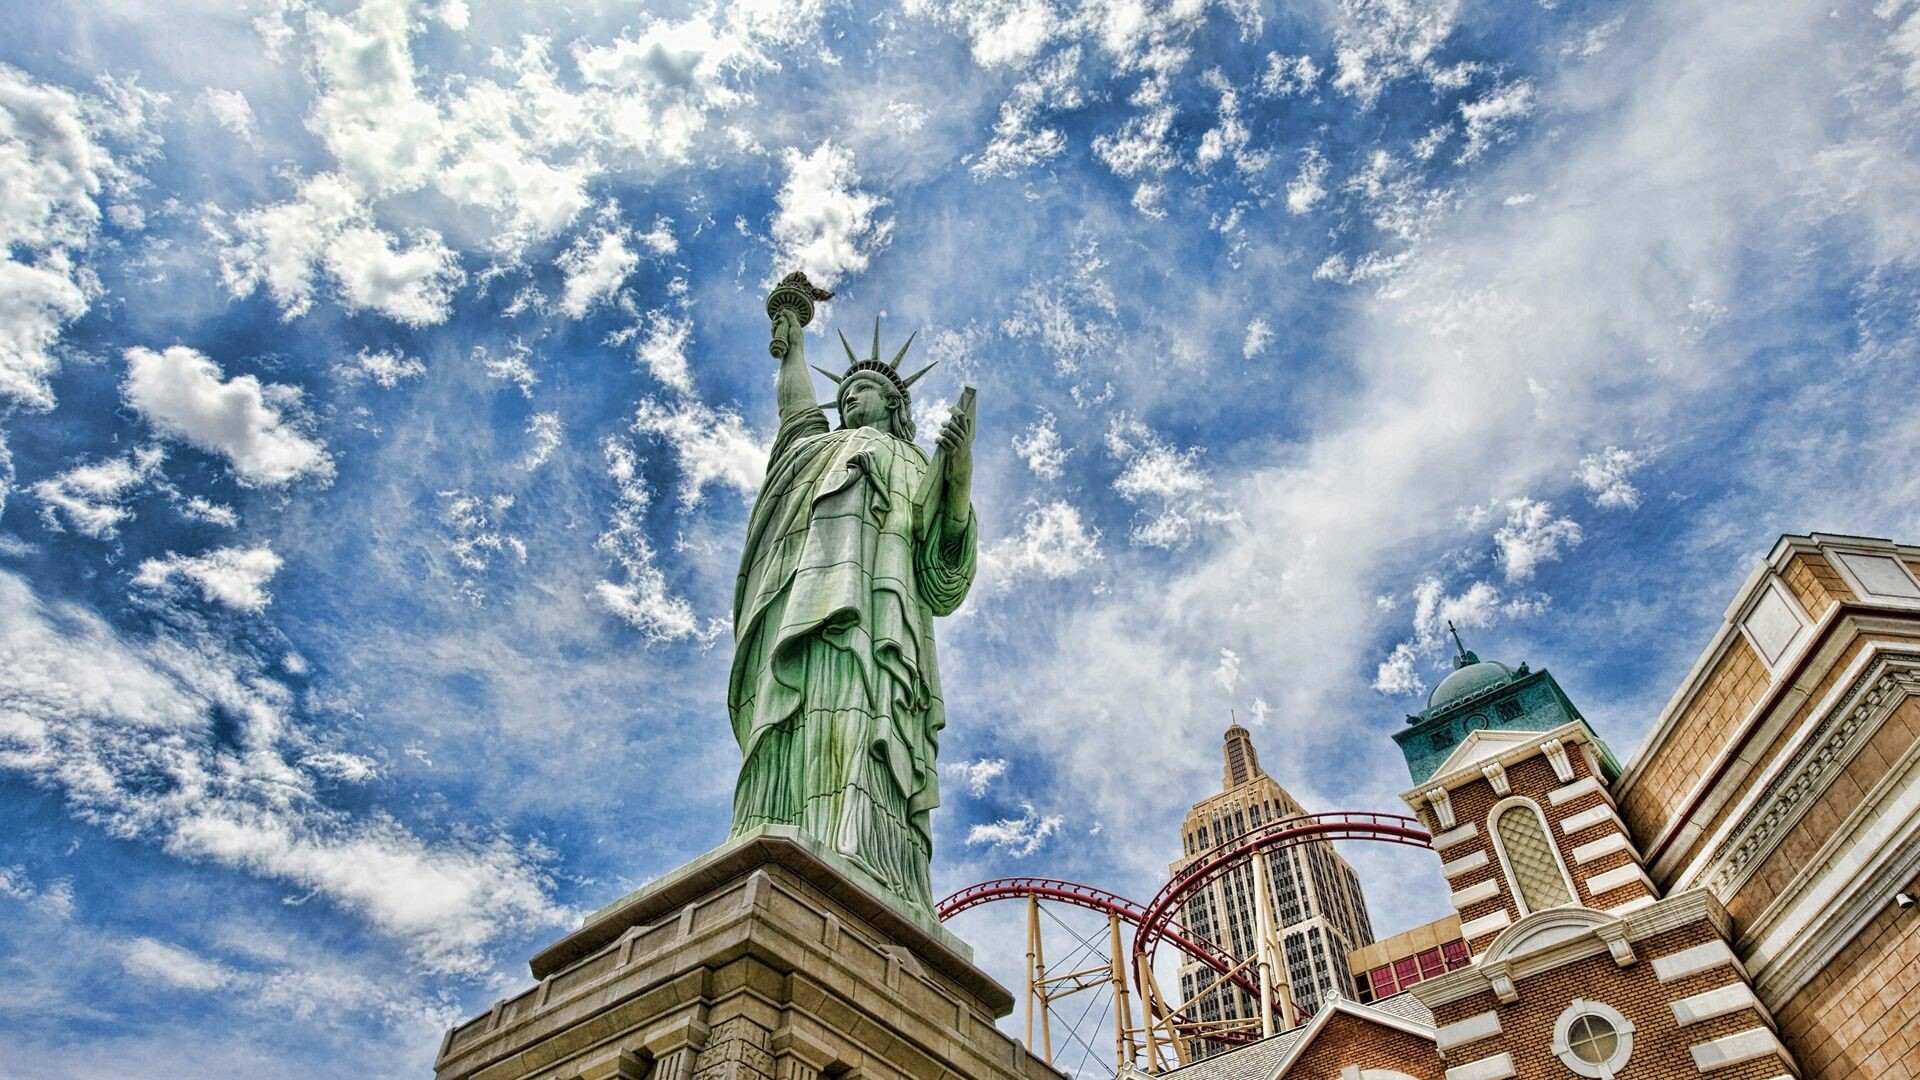 United States: Statue of Liberty, Liberty Island, New York Harbor, NYC. 1920x1080 Full HD Background.